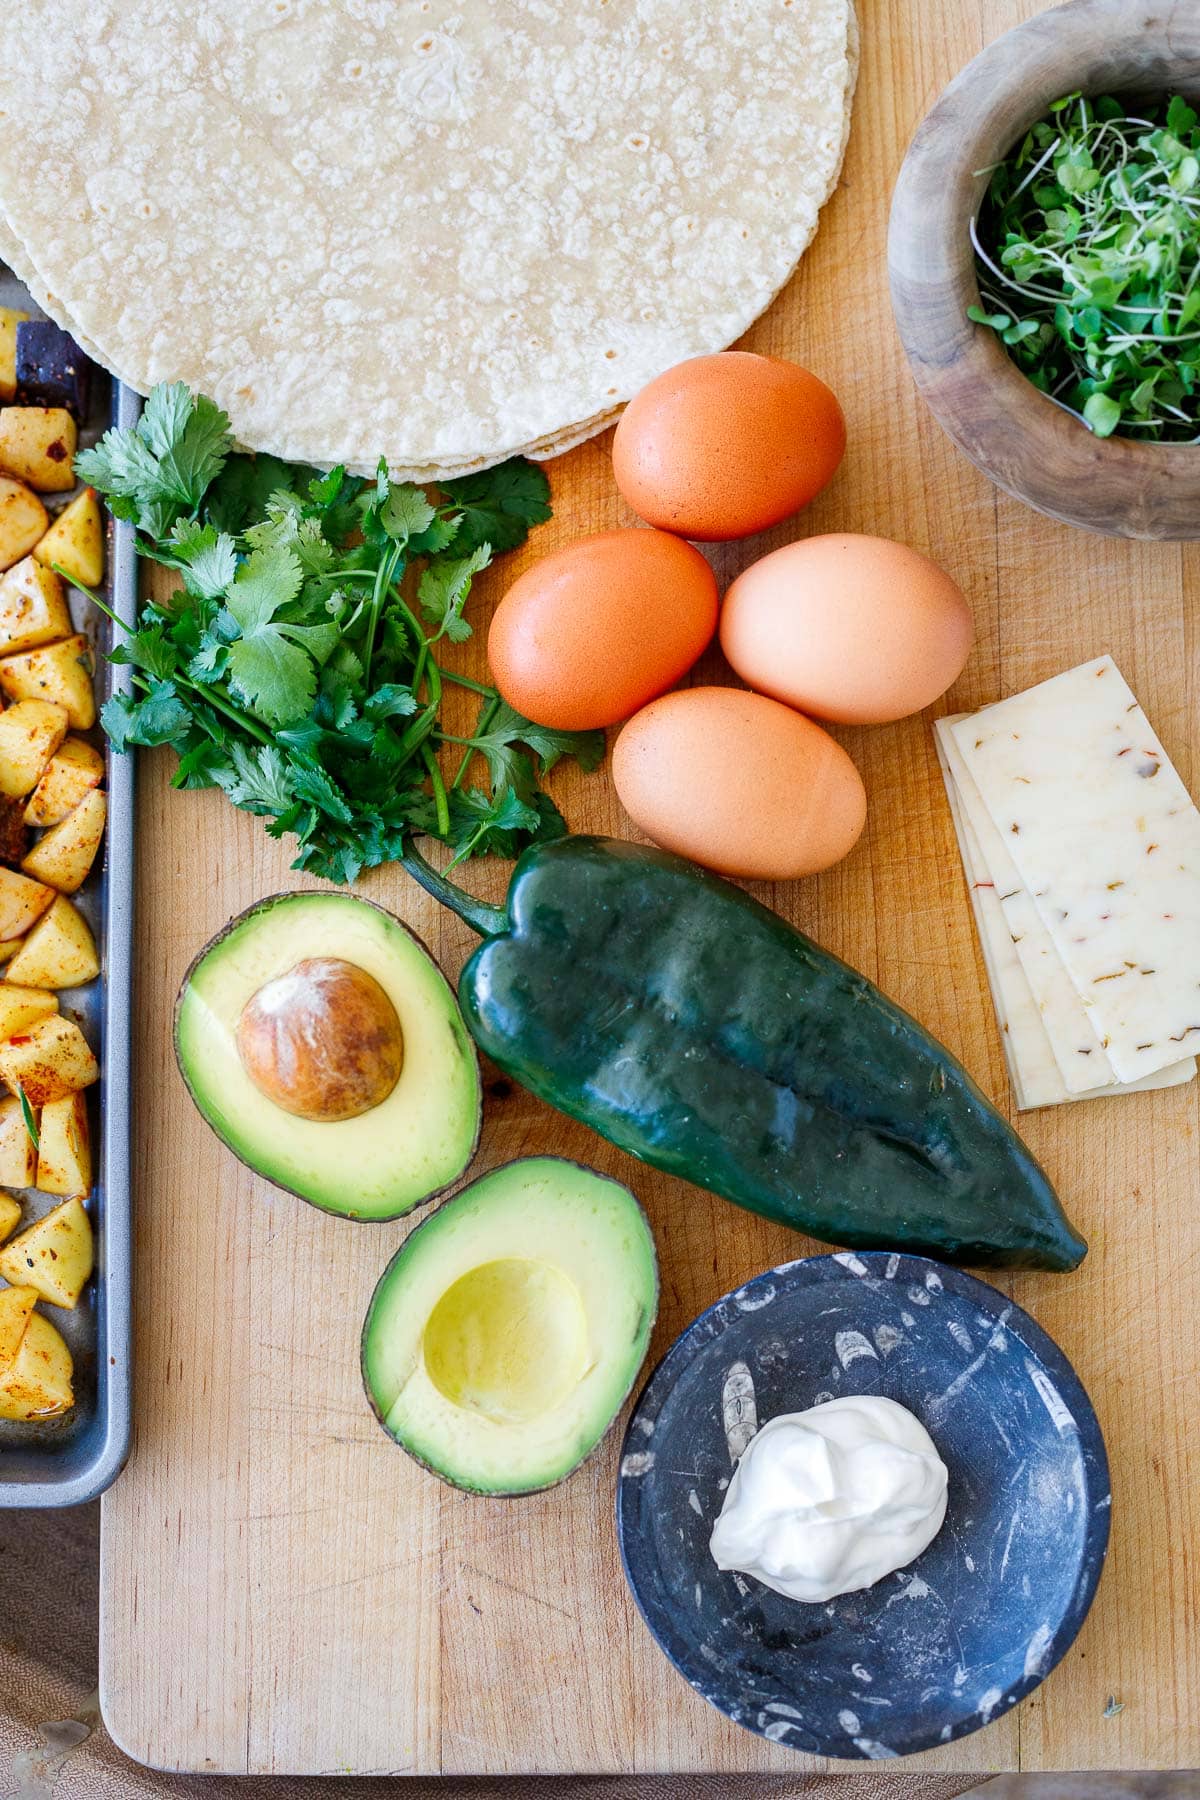 ingredients for vegetarian breakfast burritos - tortillas, microgreens, eggs, cheese, cilantro, poblano, avocado, potatoes, sour cream.